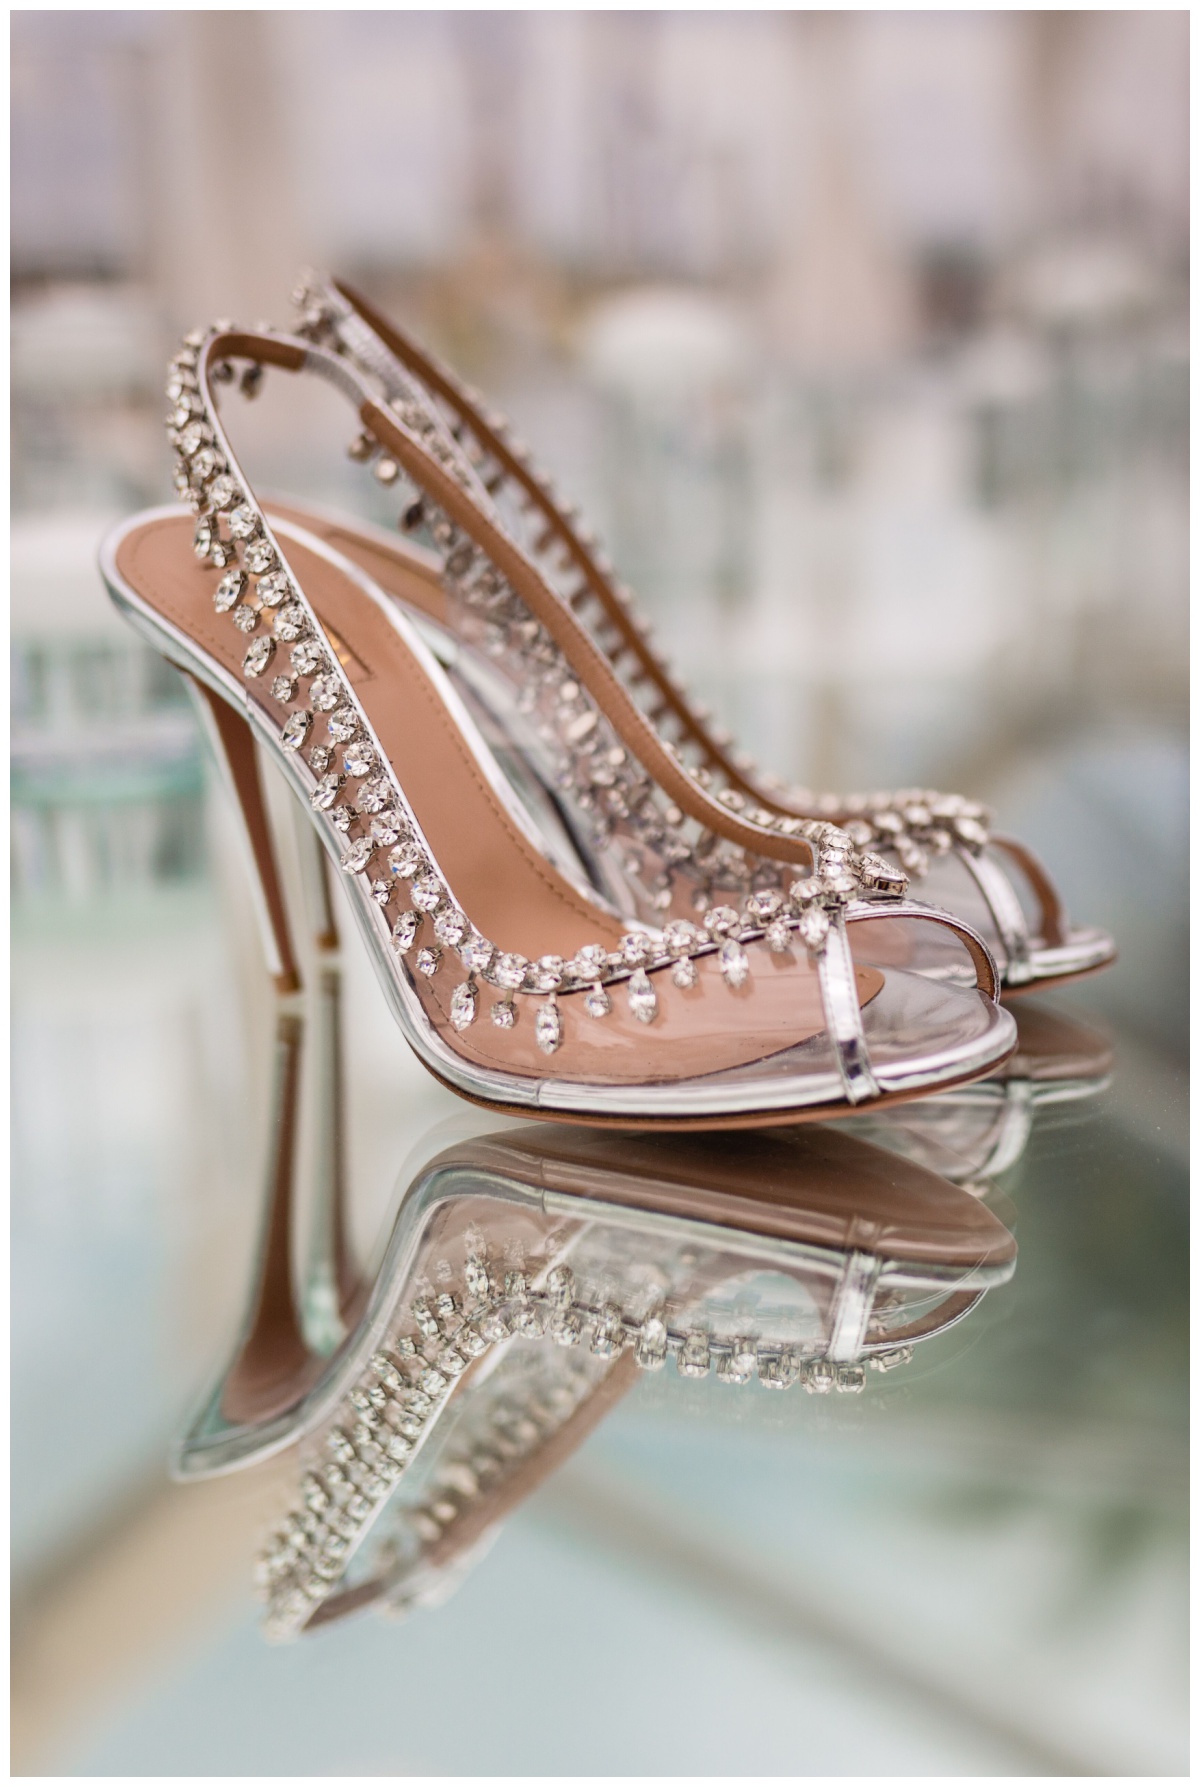 Florida Keys wedding shoes